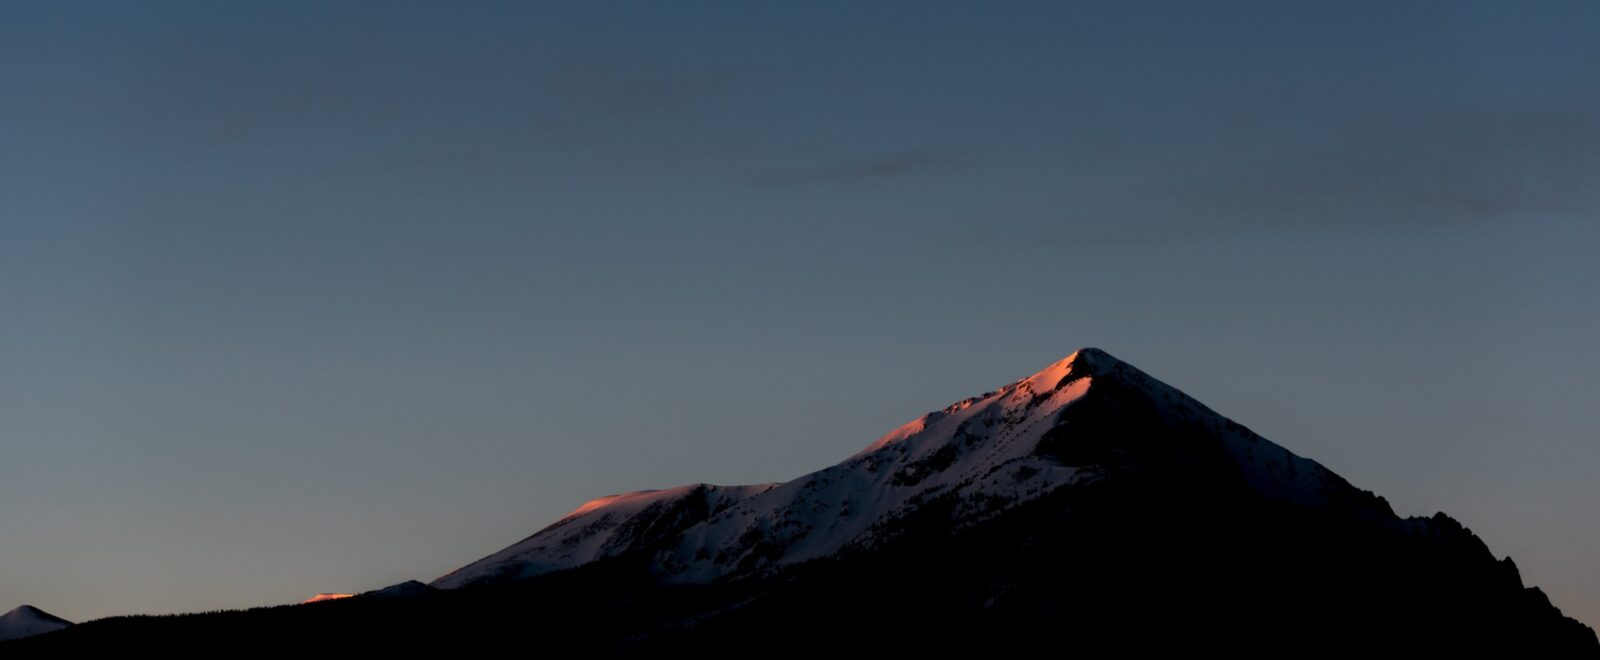 Silverthorne peak at dusk. Photo by Nathan Anderson via Unsplash.